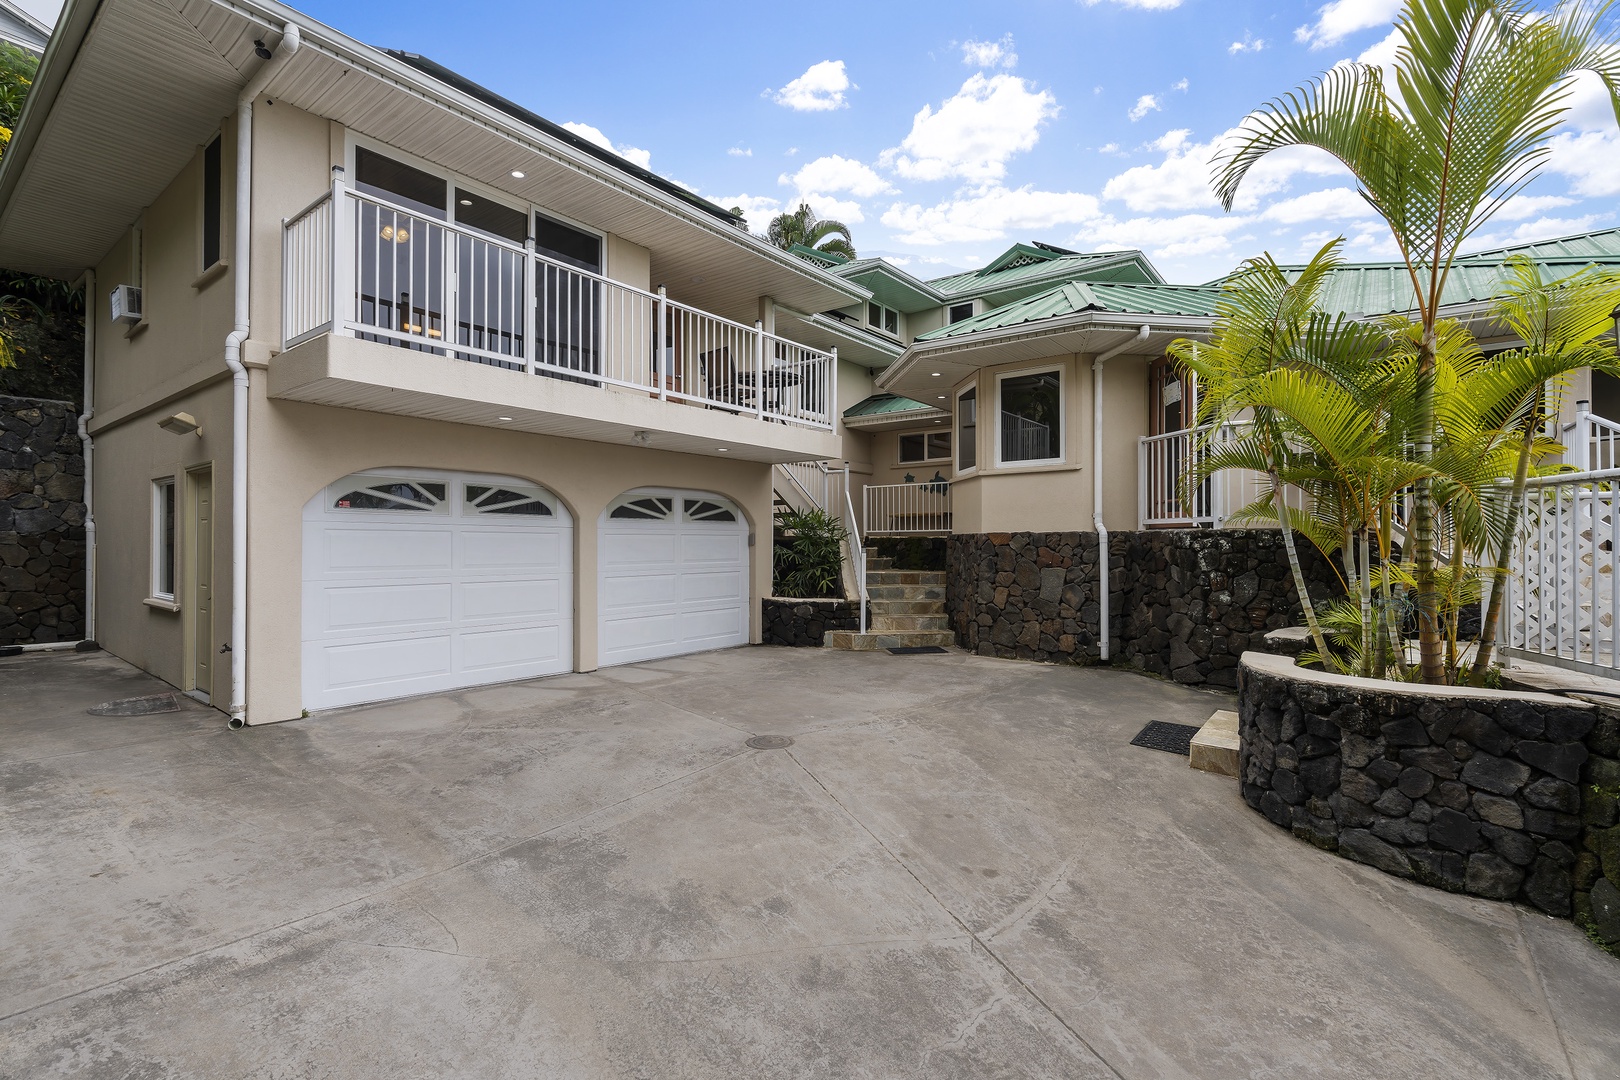 Kailua-Kona Vacation Rentals, Honu Hale - Exterior showing the garage access